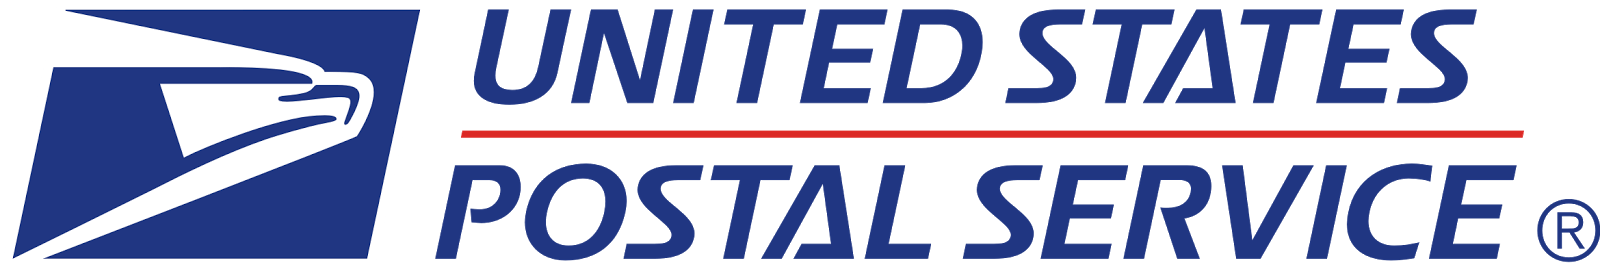 United states postal service logo